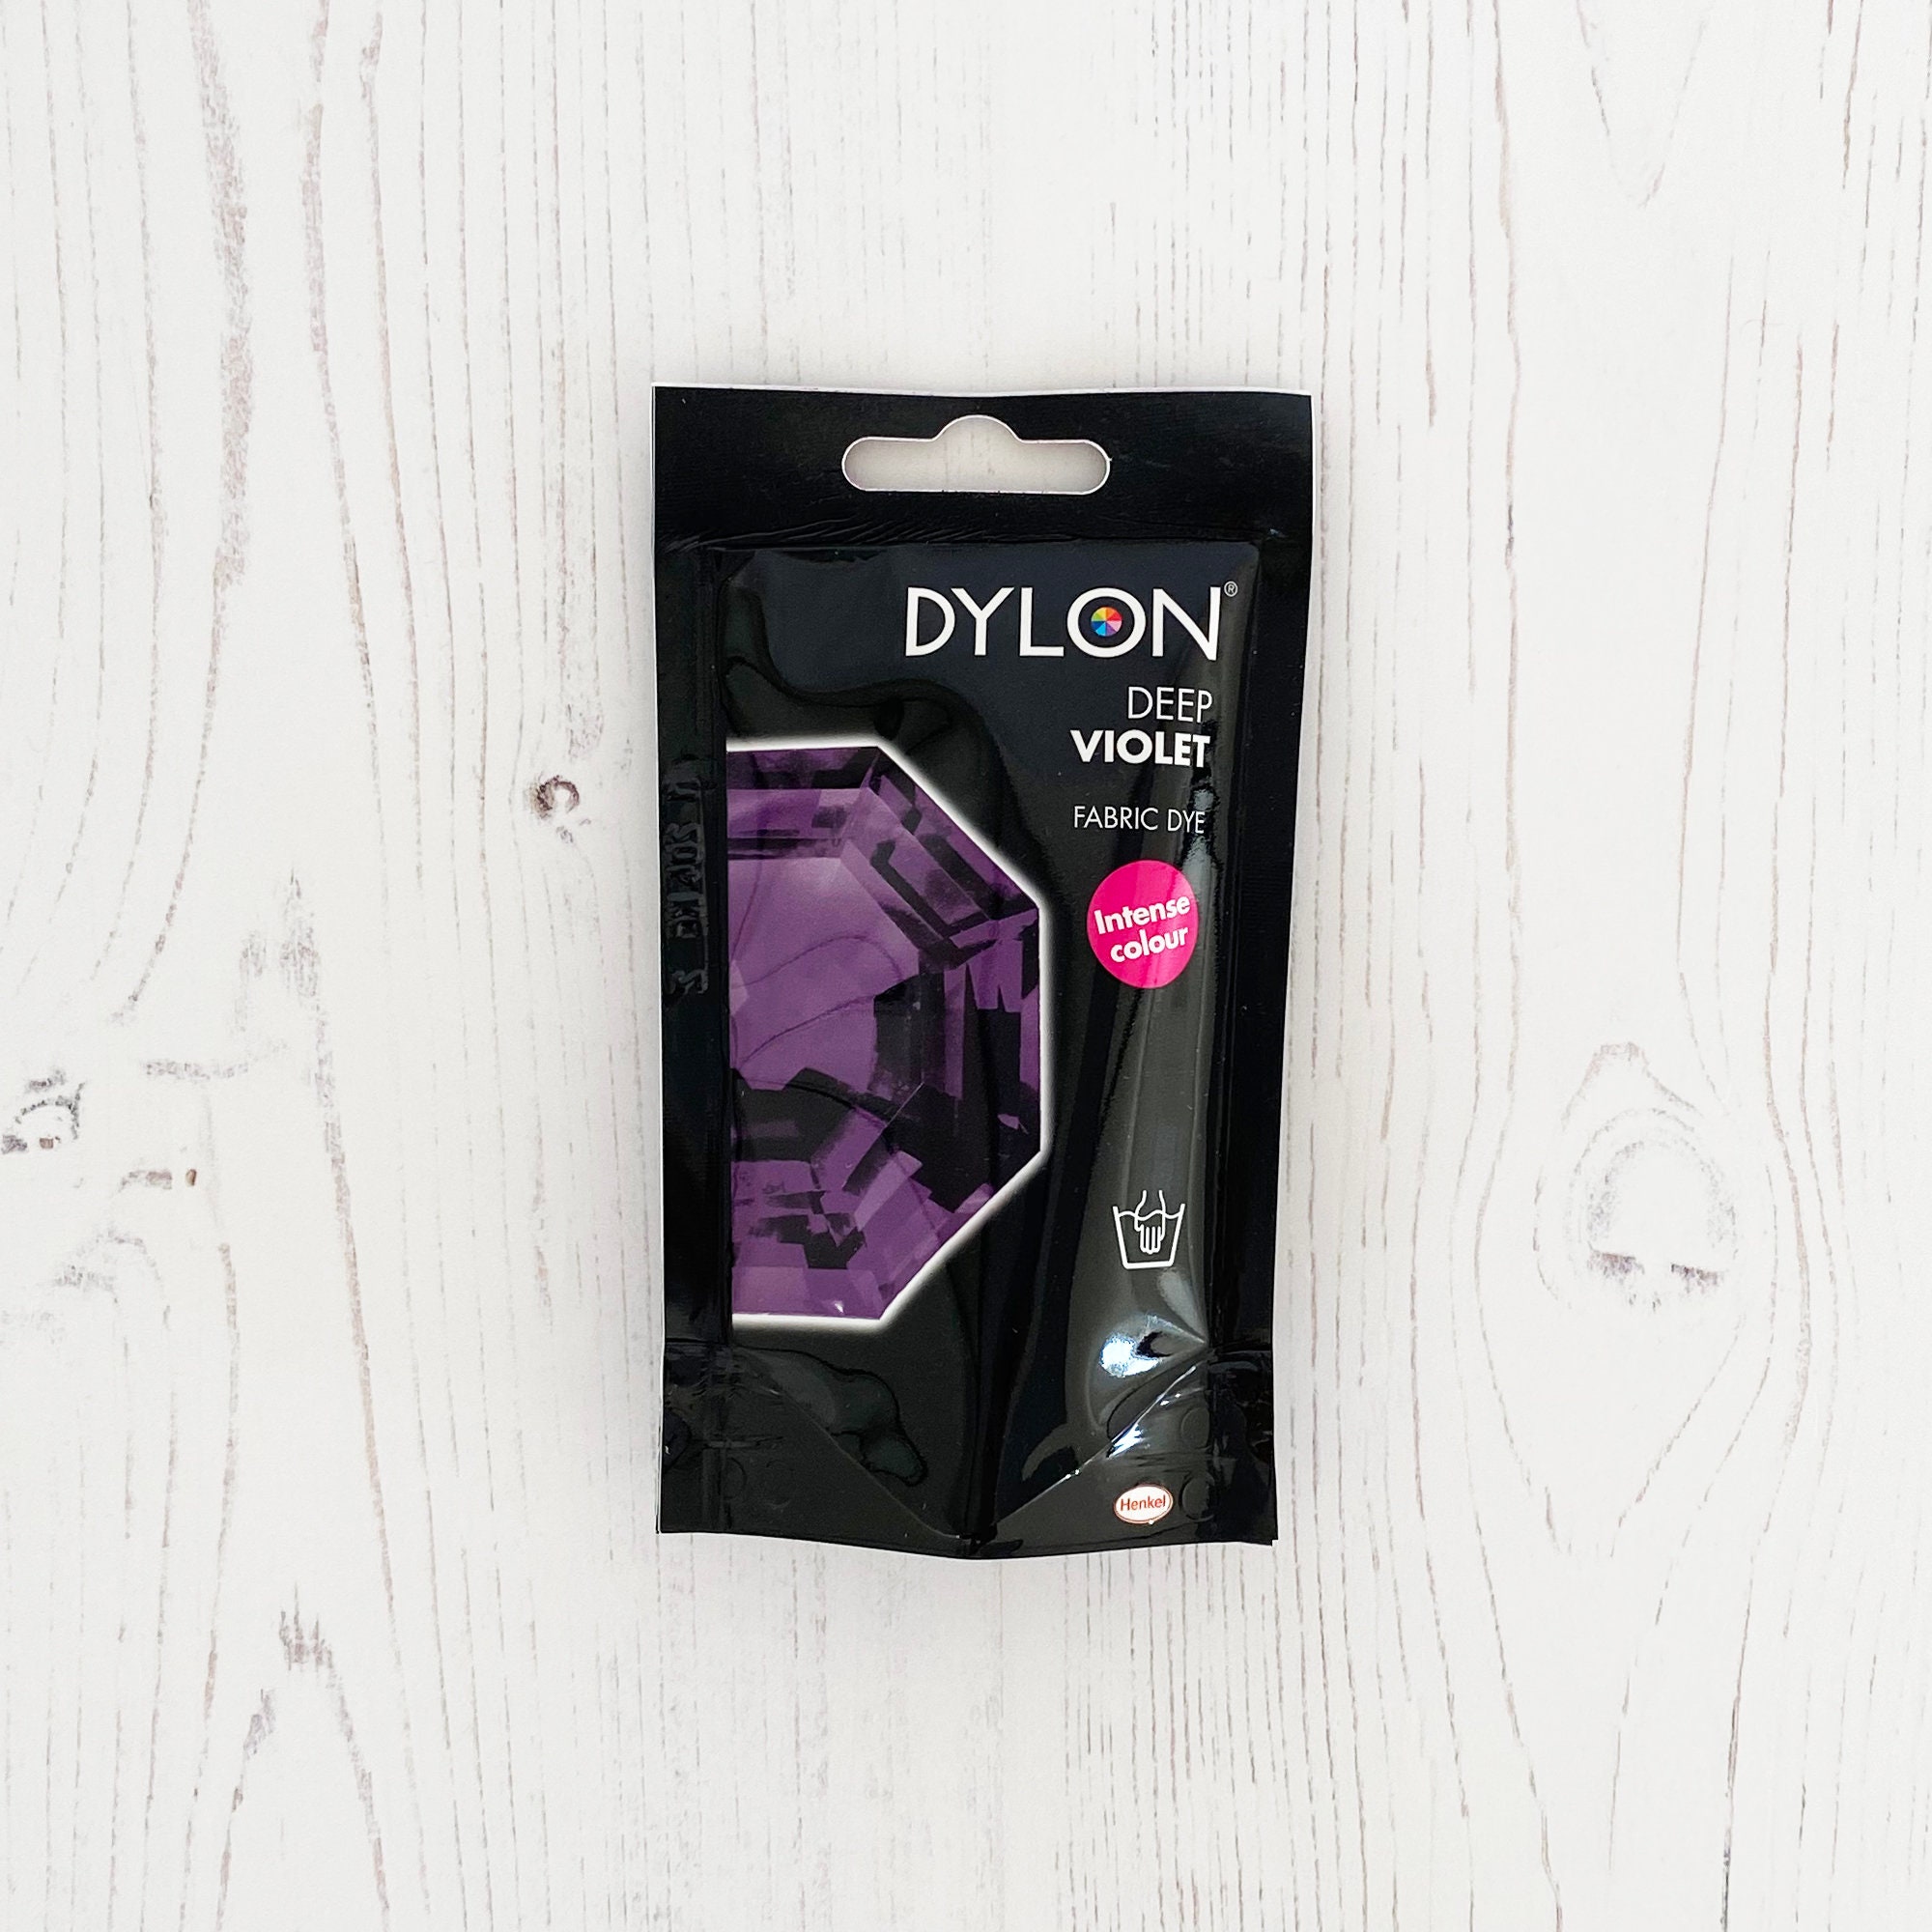 Dylon Fabric Hand Dye, 50g Sachet, Purple. Intense Colour Fabric Dye in  Easy Use Sachet. Dylon Intense Violet Fabric Dye 